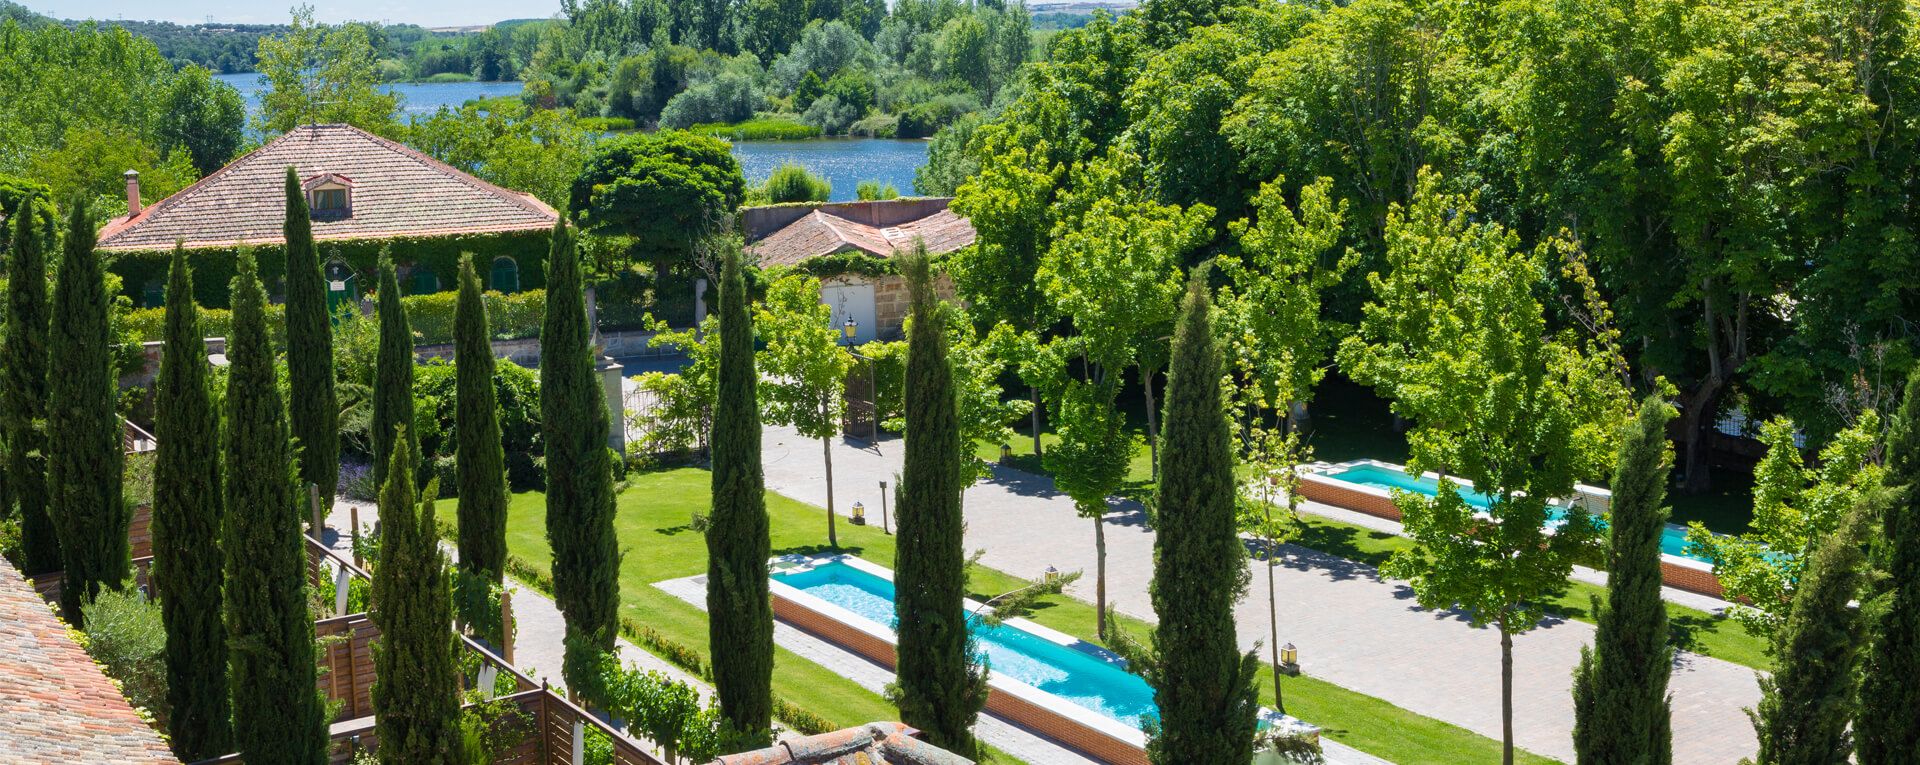 Hacienda Zorita Wine Hotel & Spa, Spain 